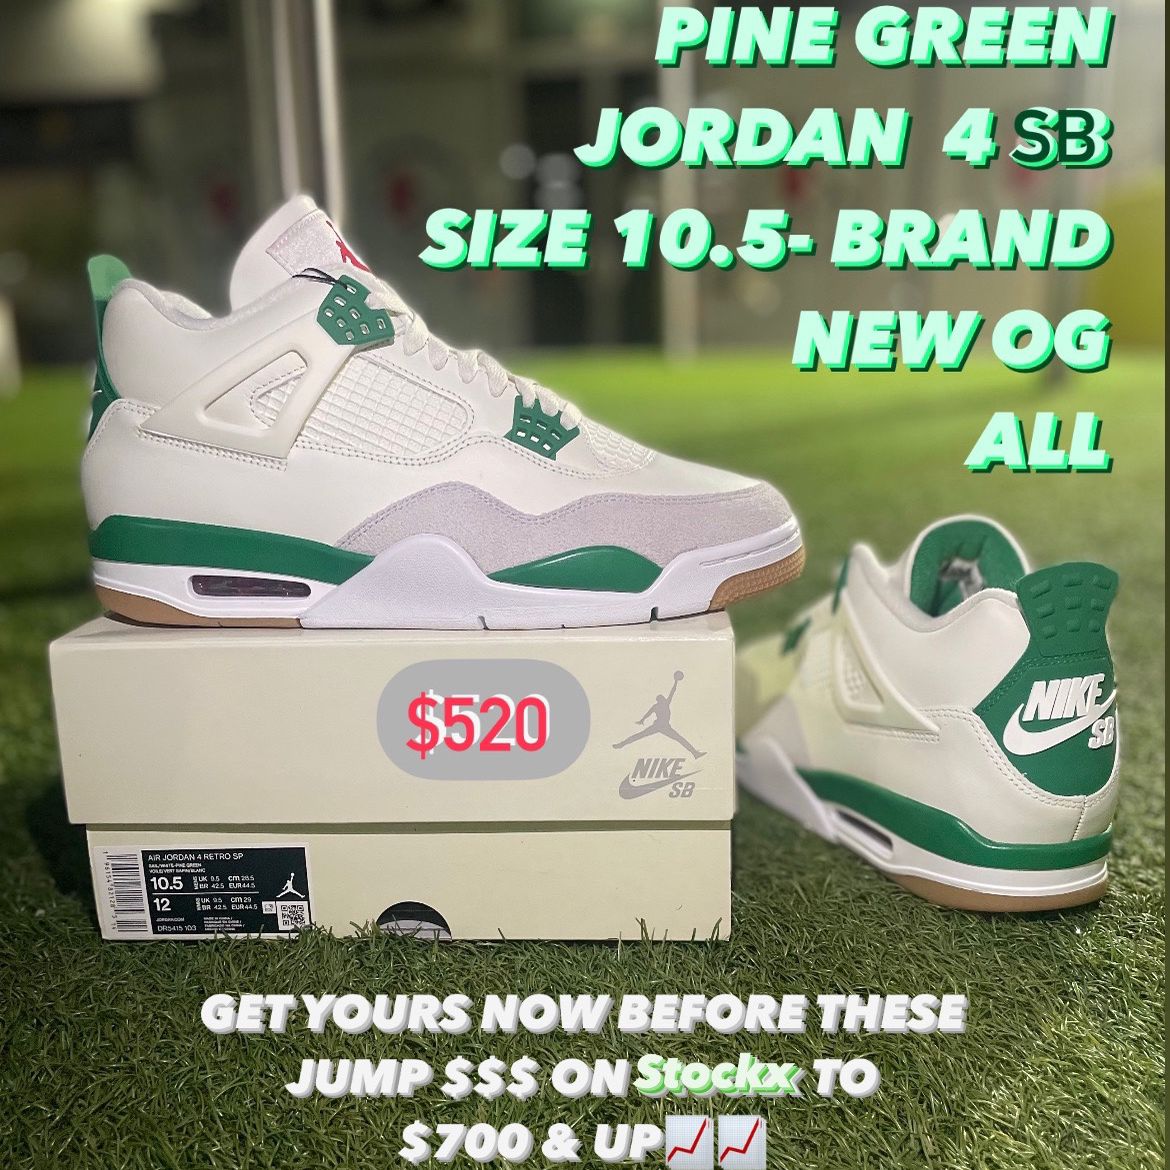 Jordan 4 SB Pine Green Size 10.5 